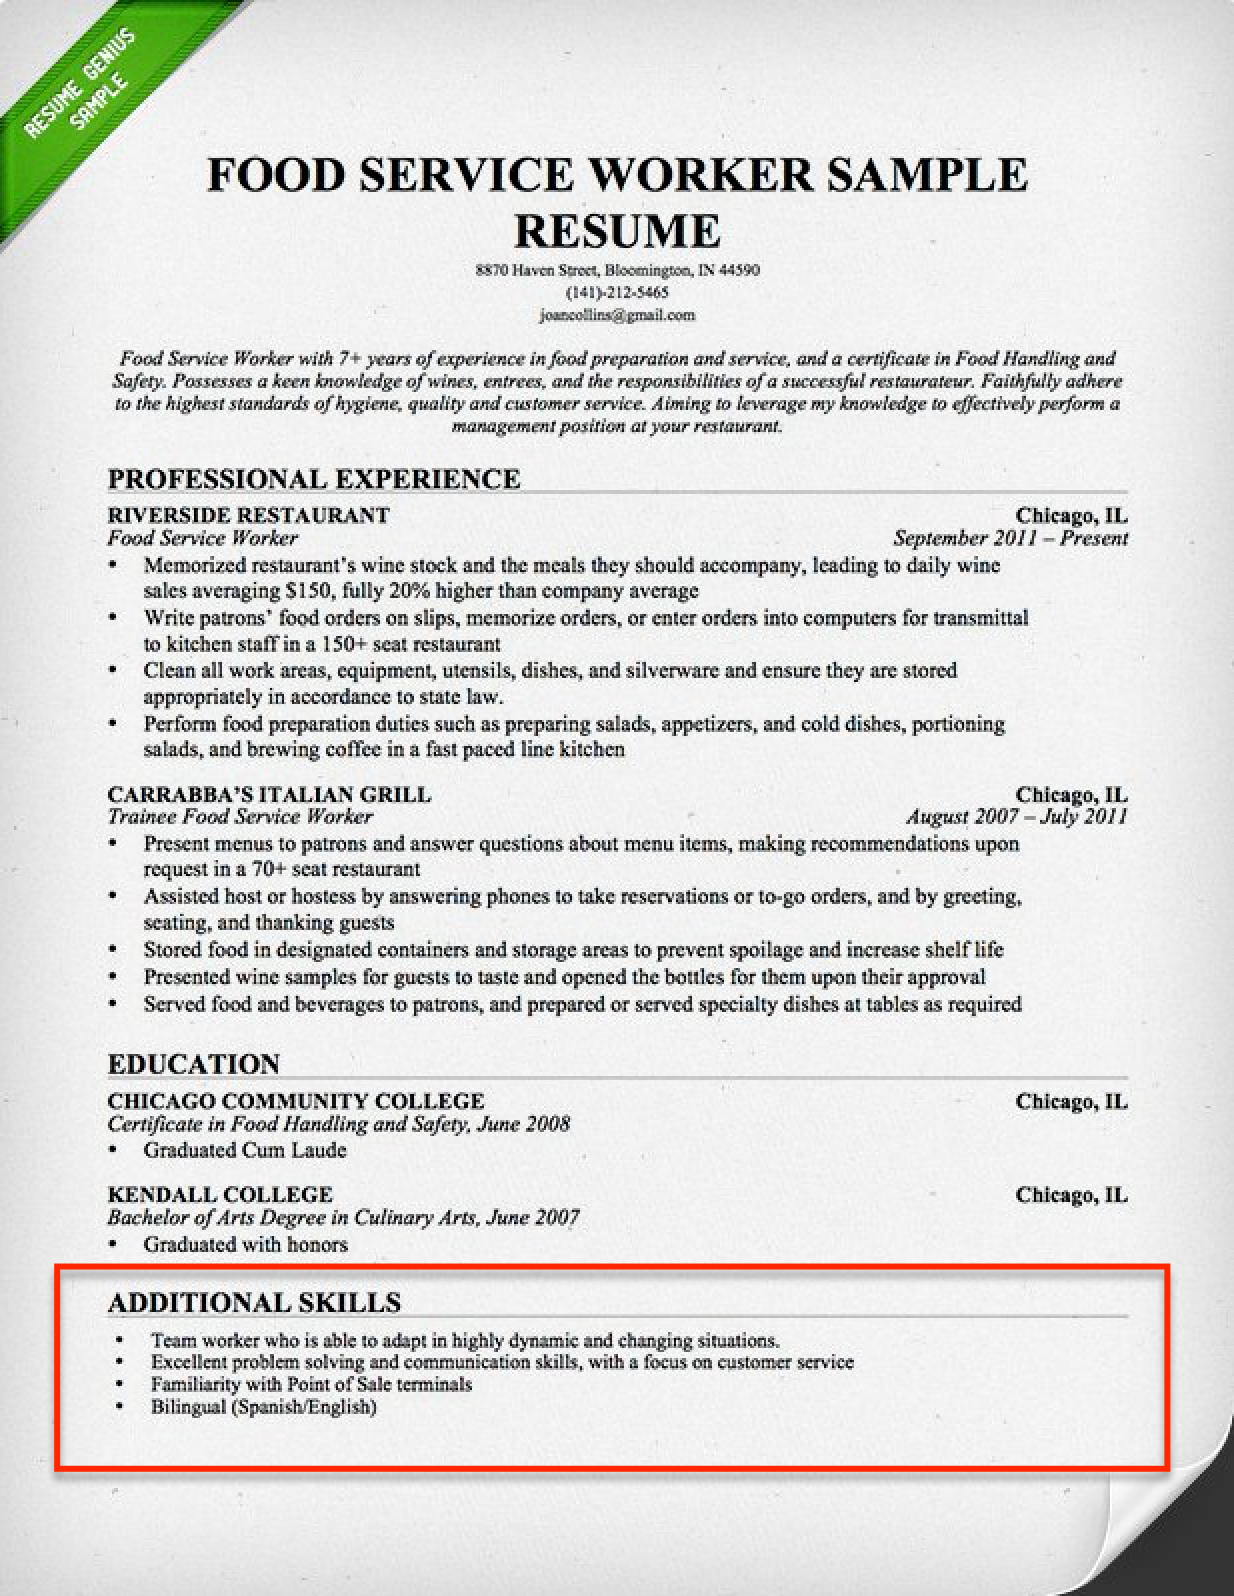 Resume Skills Section 250 Skills For Your Resume Resumegenius